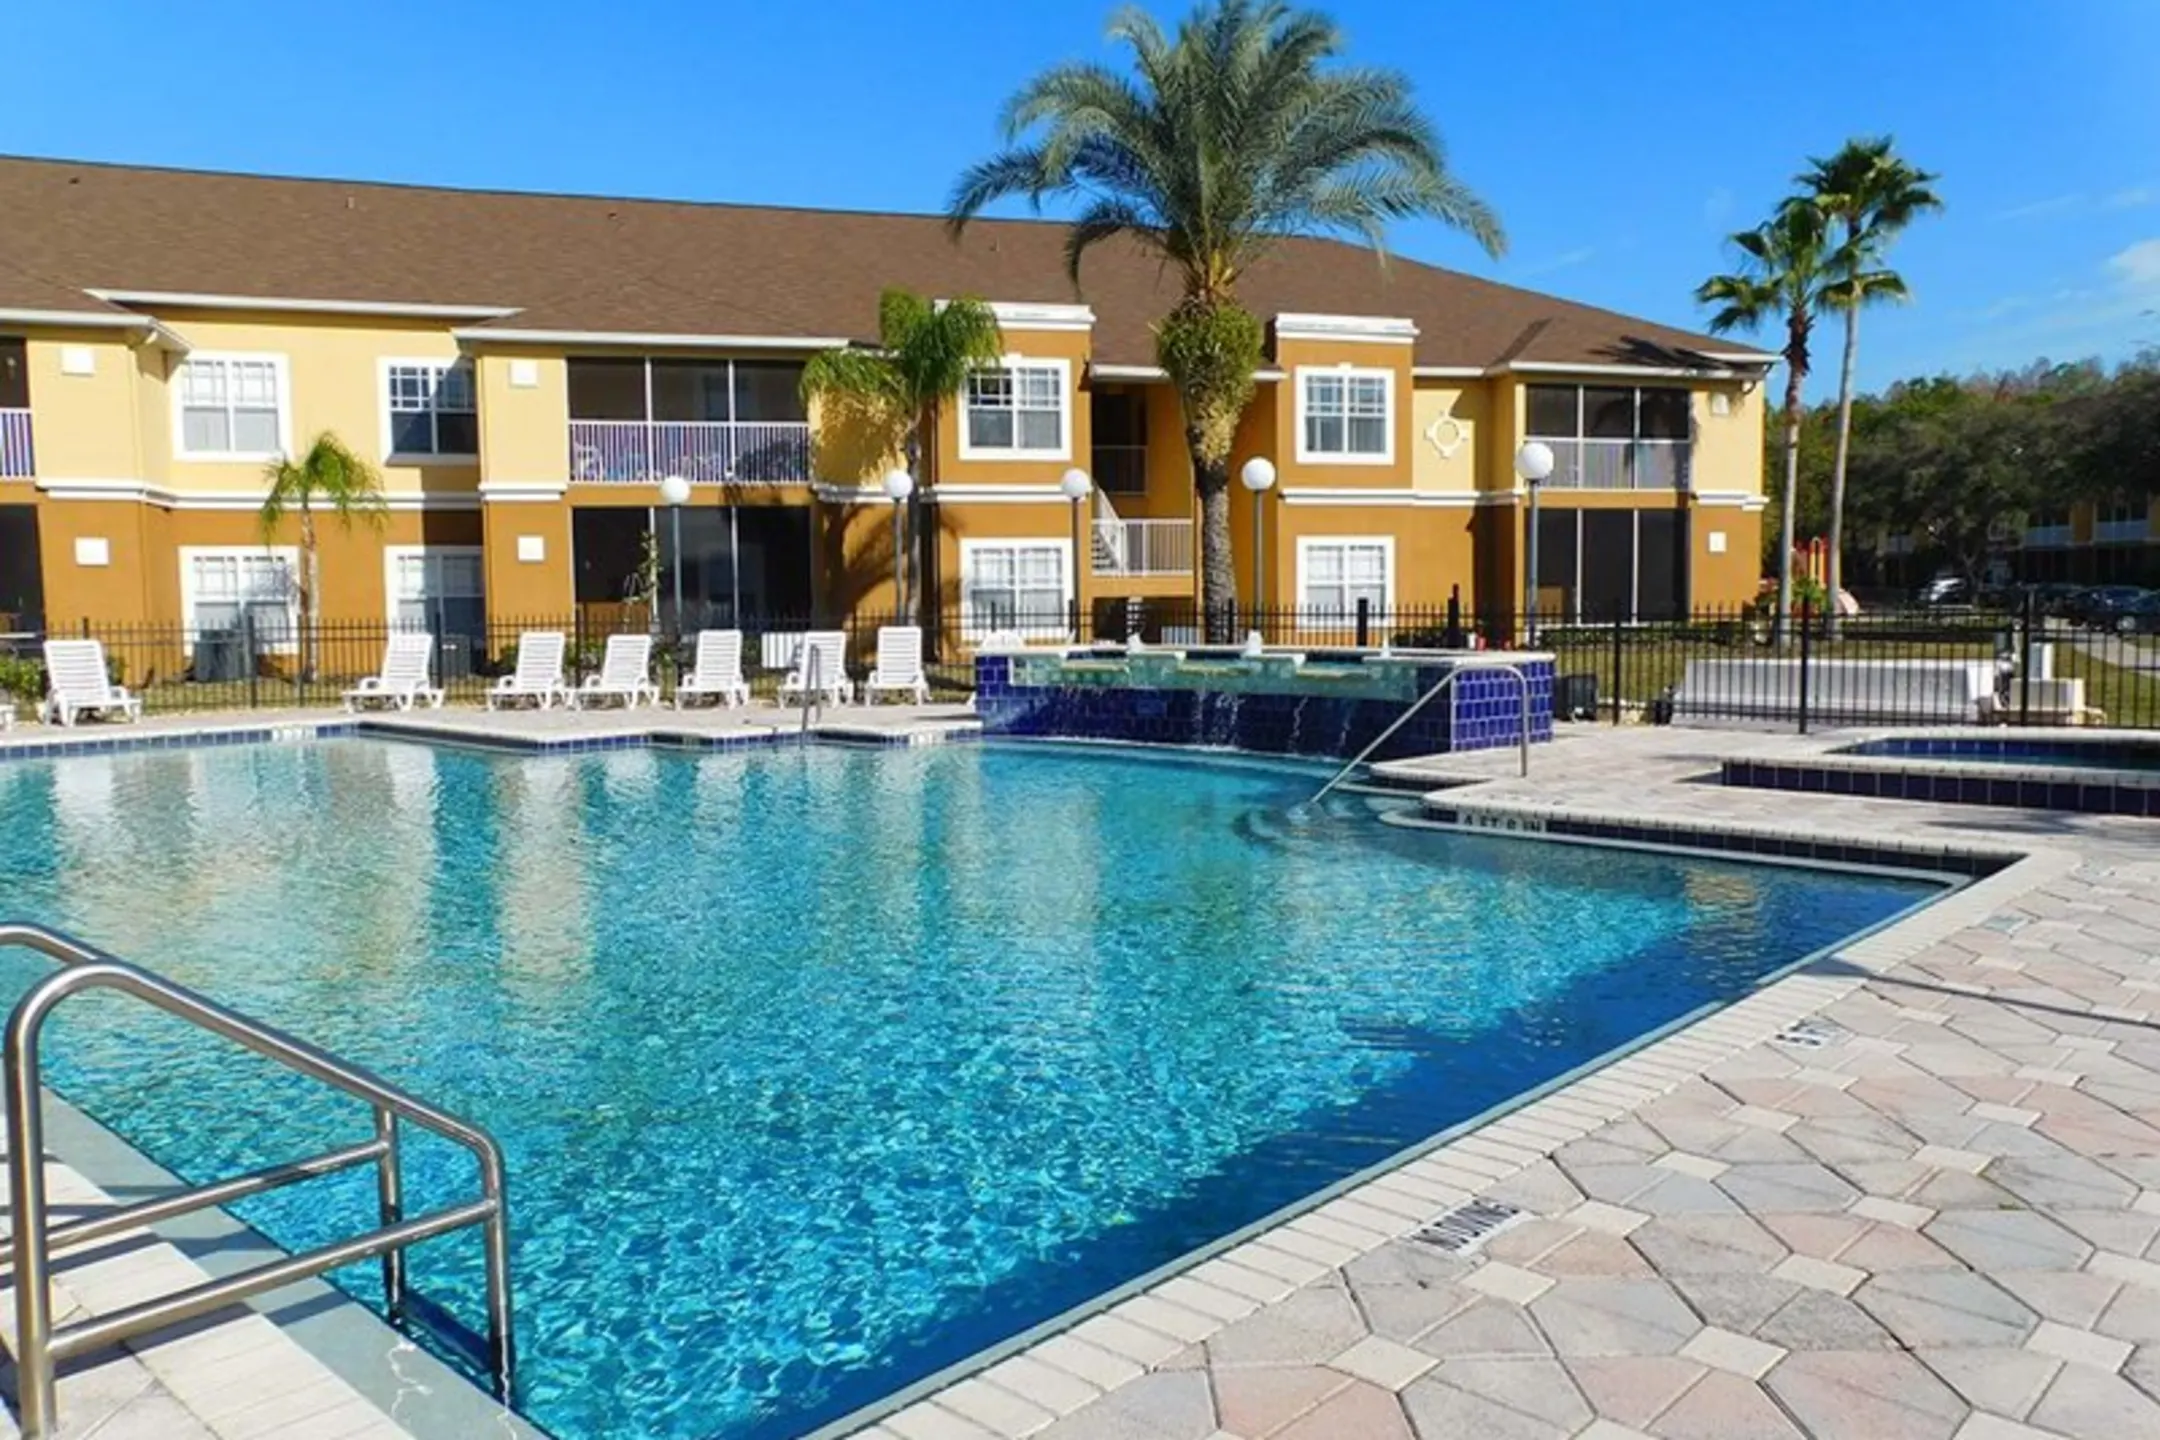 Pool - Compton Place At Tampa Palms - Tampa, FL